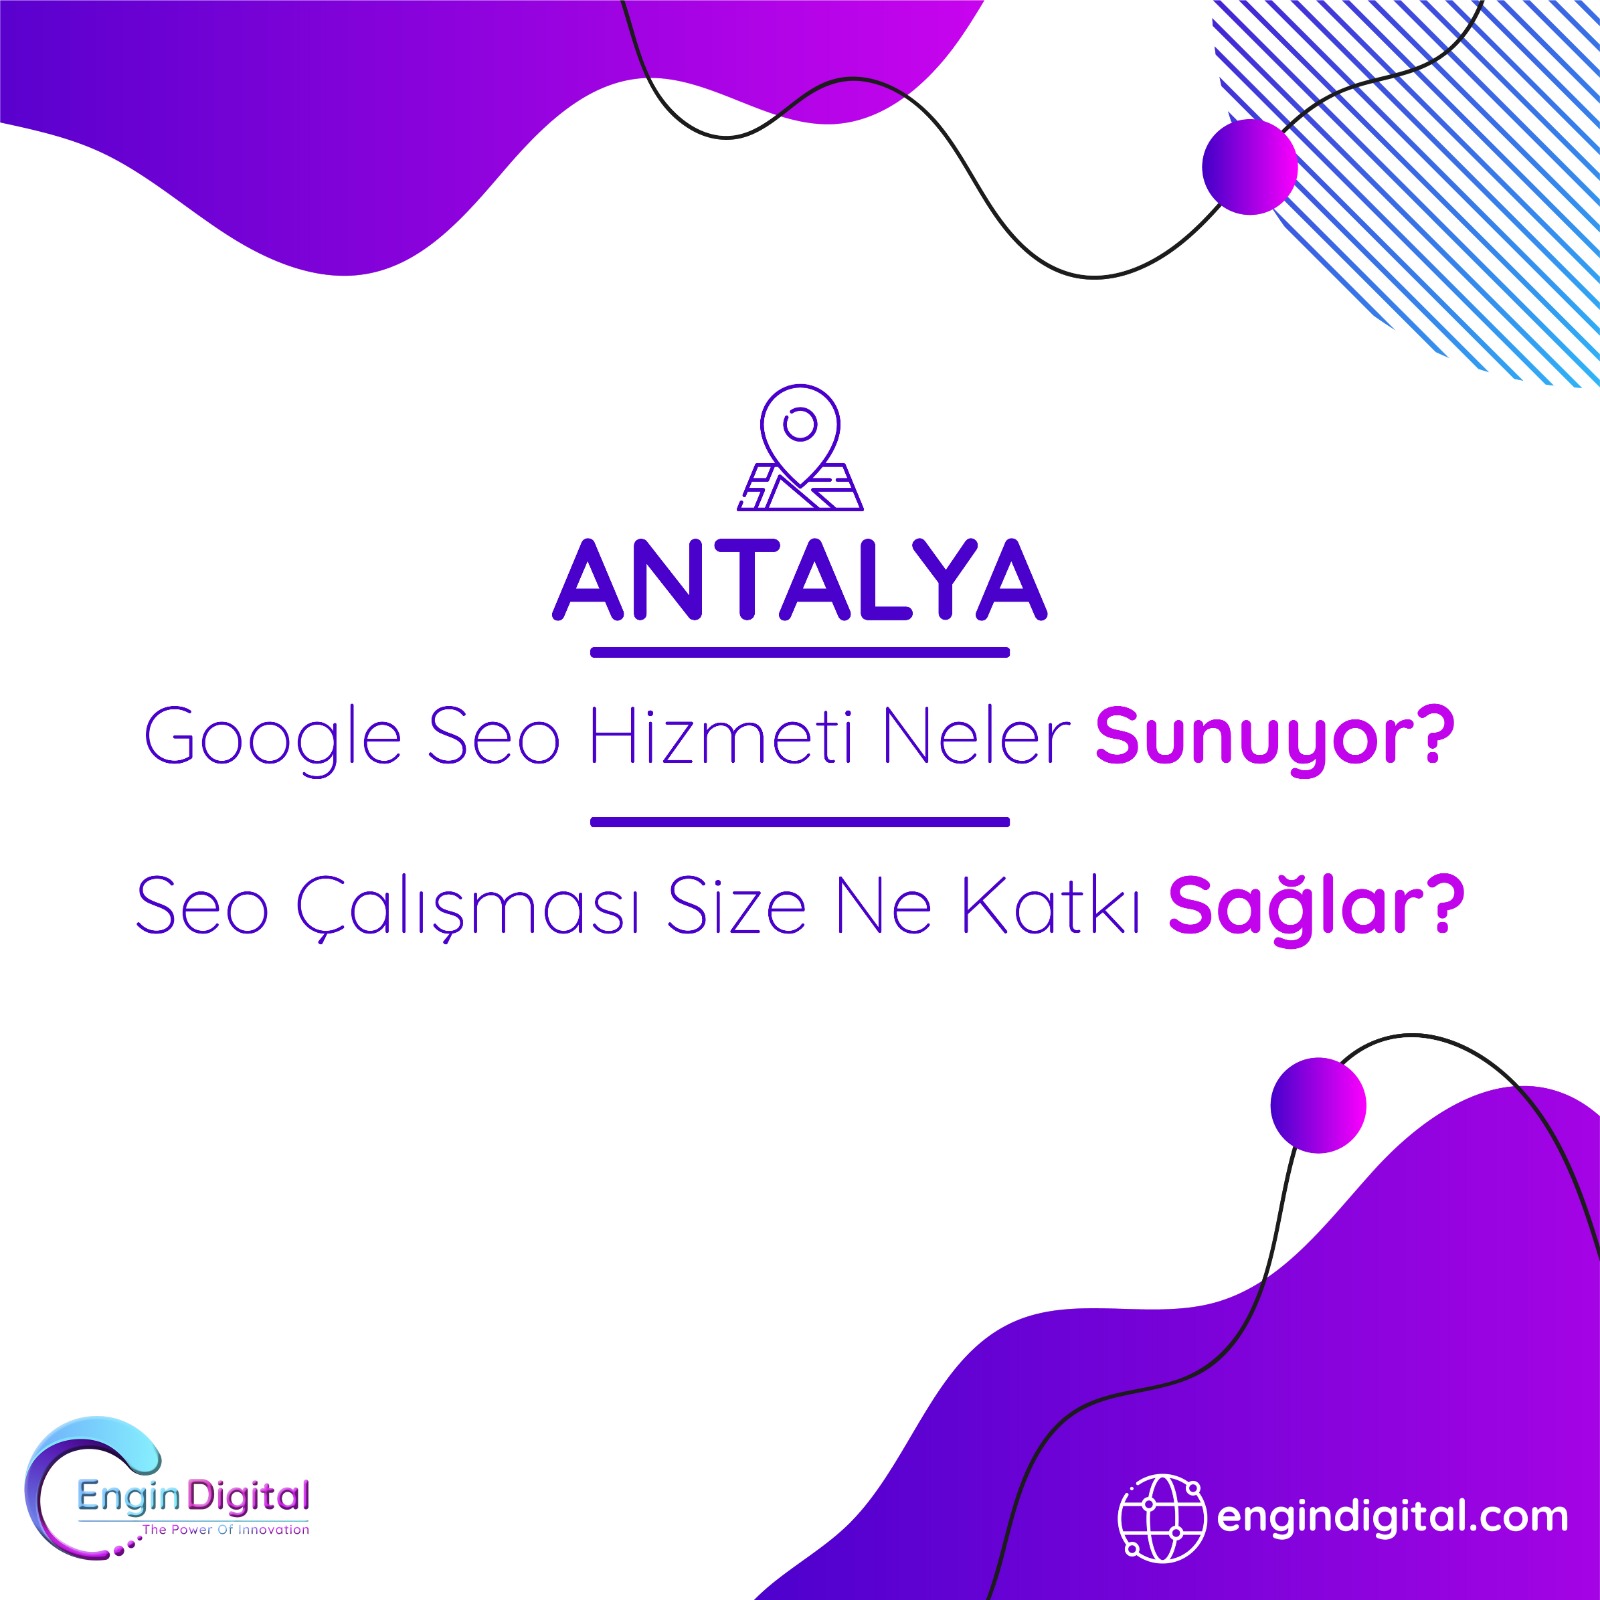 Antalya Google Seo Hizmeti